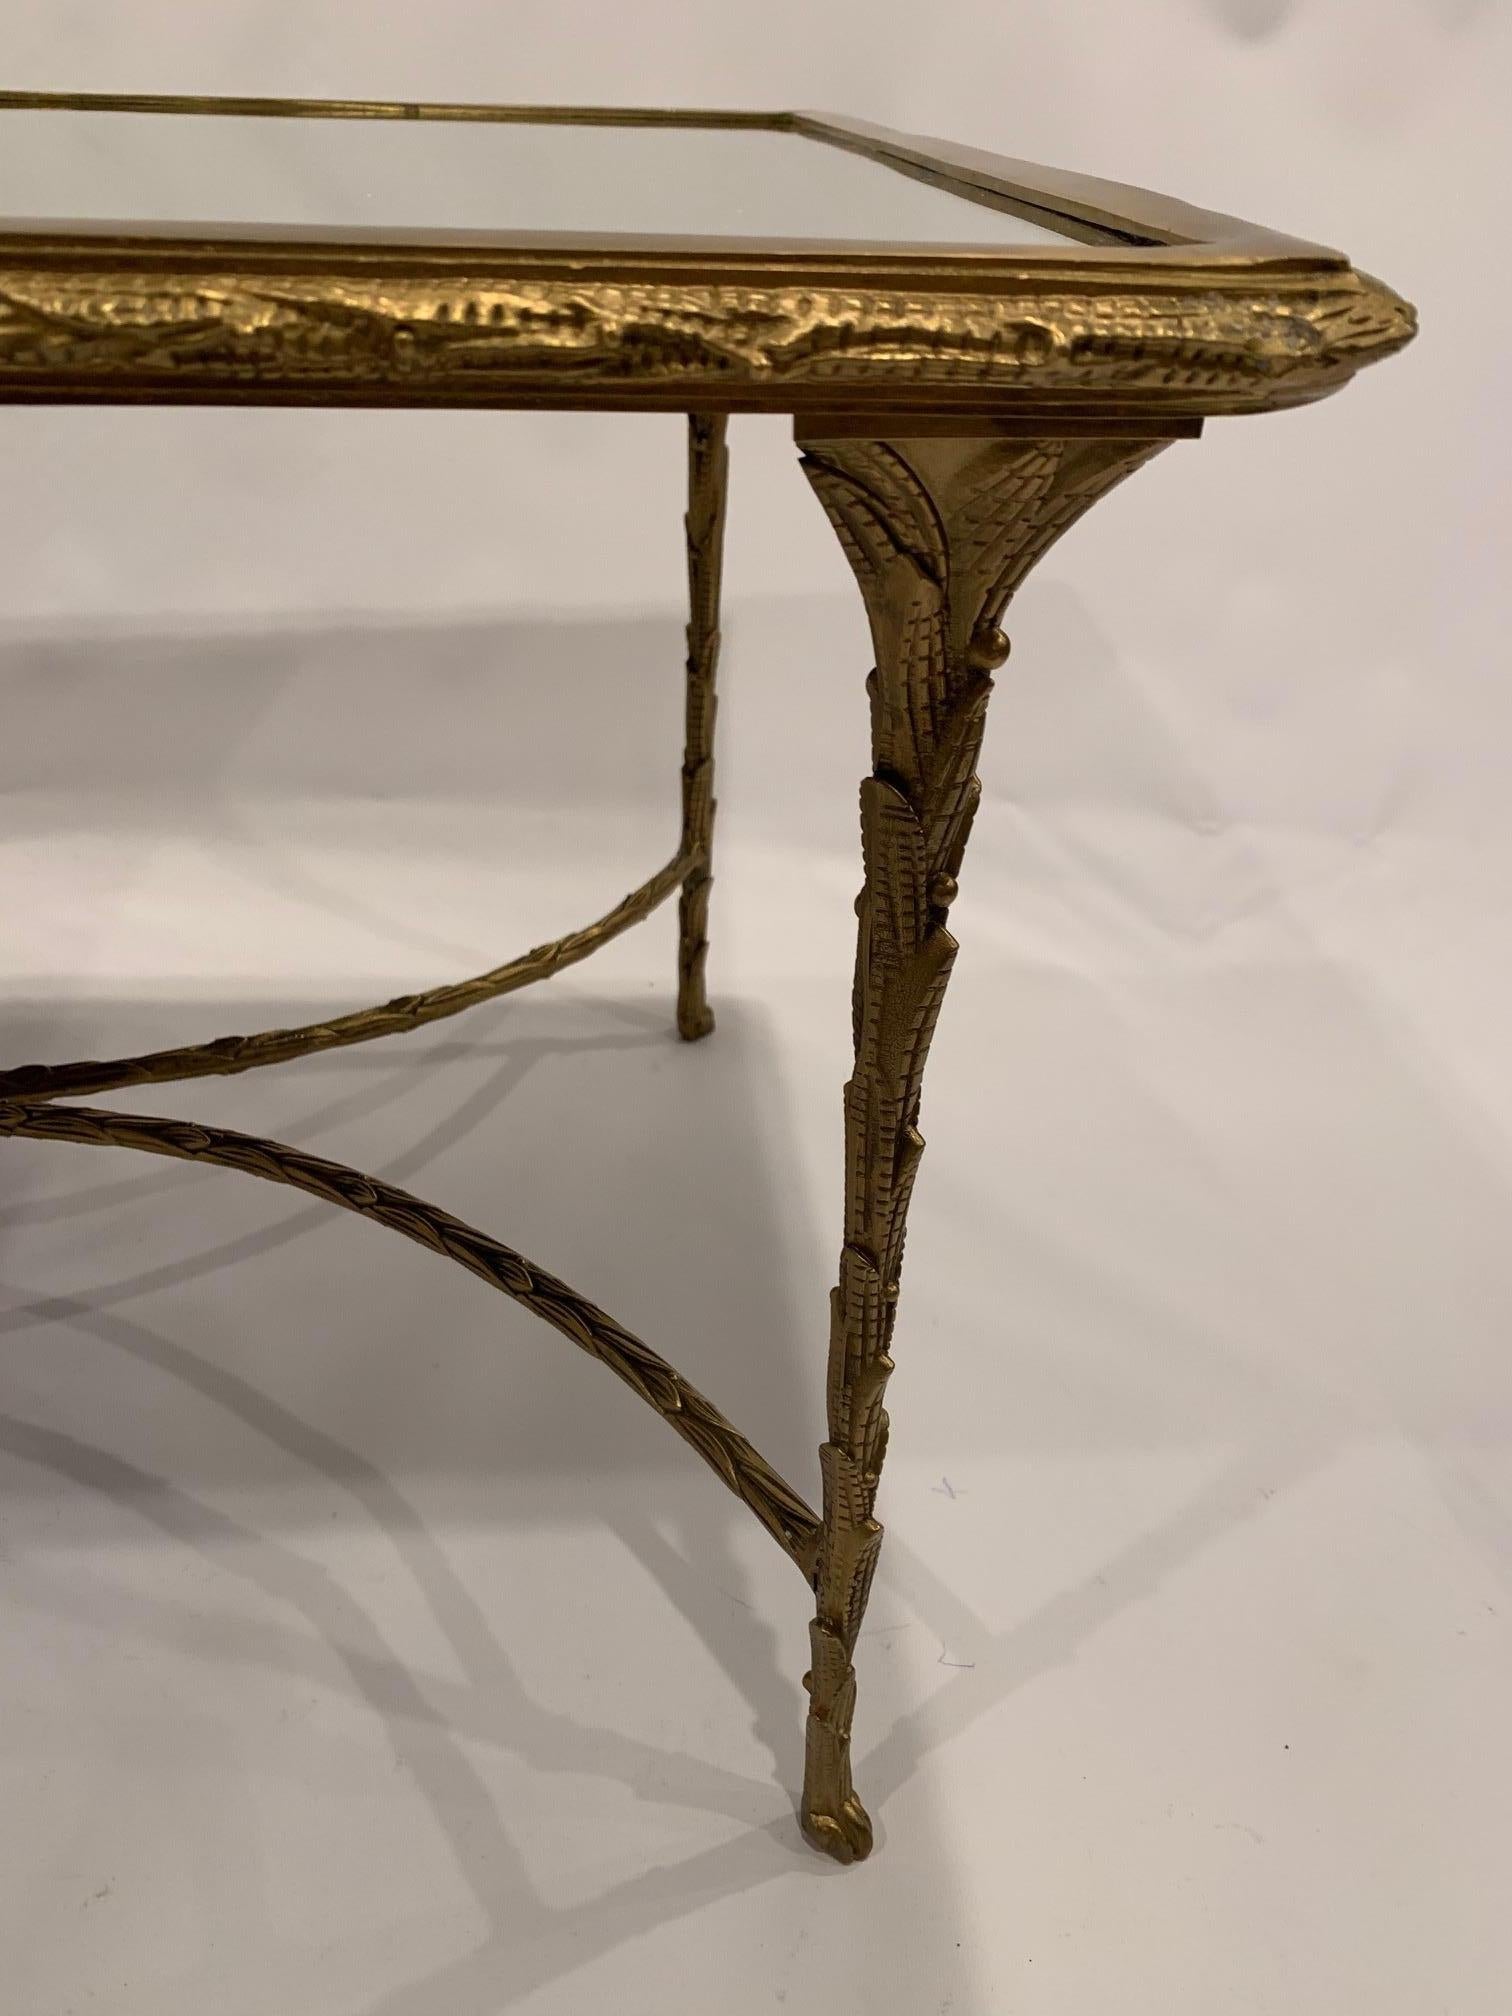 North American Impressive & Elegant Rectangular Burnished Brass & Mirrored Coffee Table